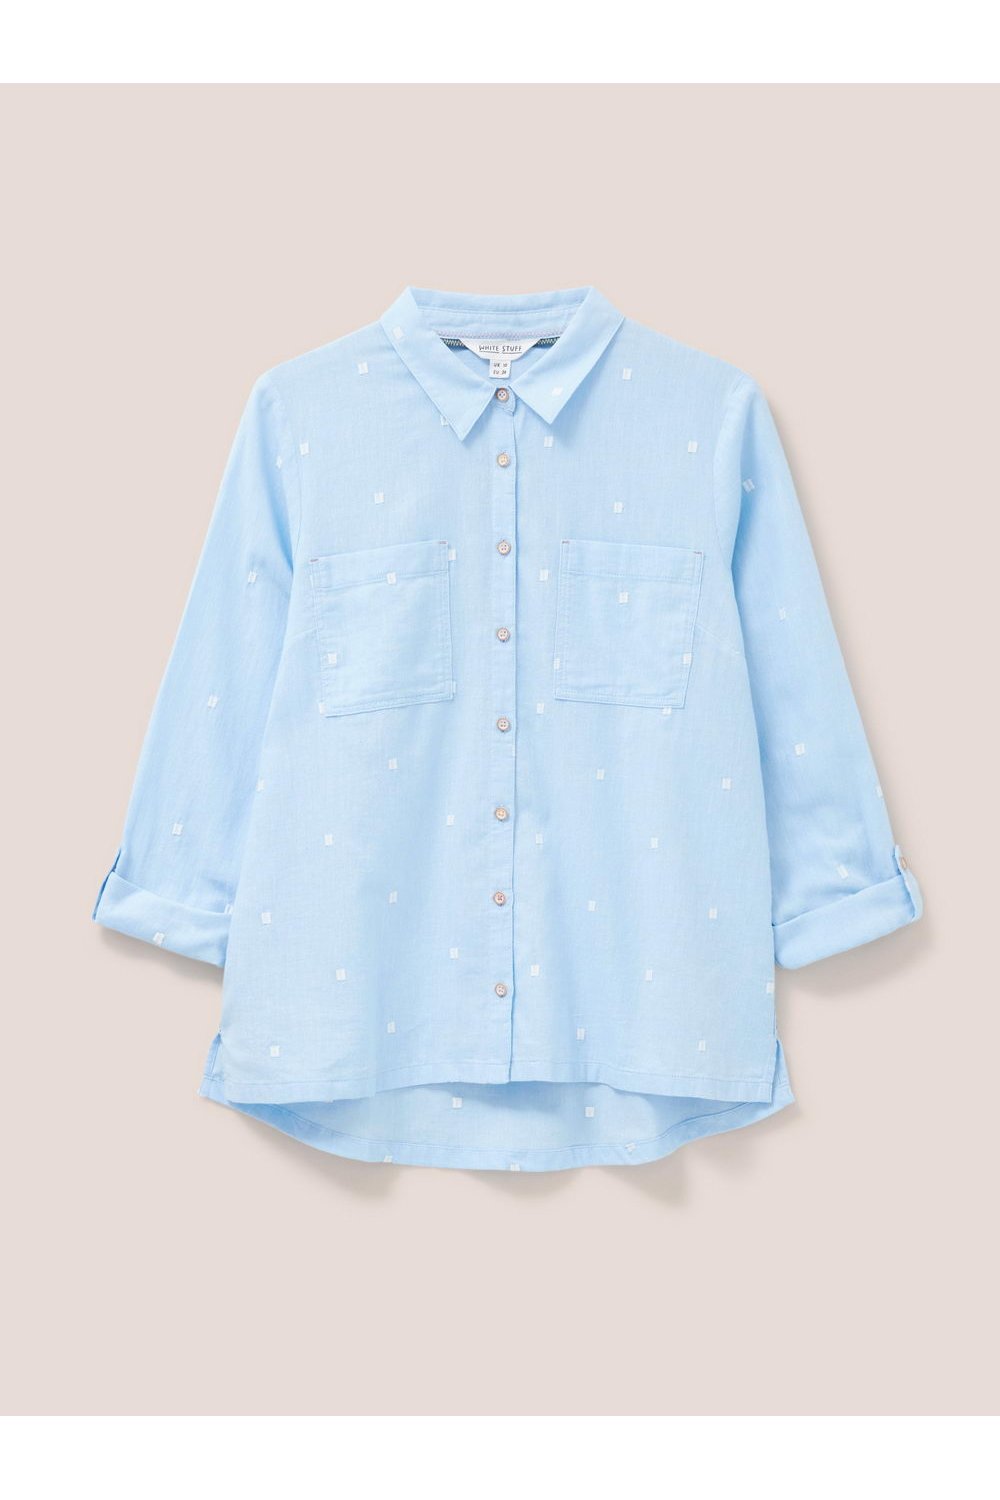 White Stuff Sophie Organic Cotton Shirt in BLUE MLT